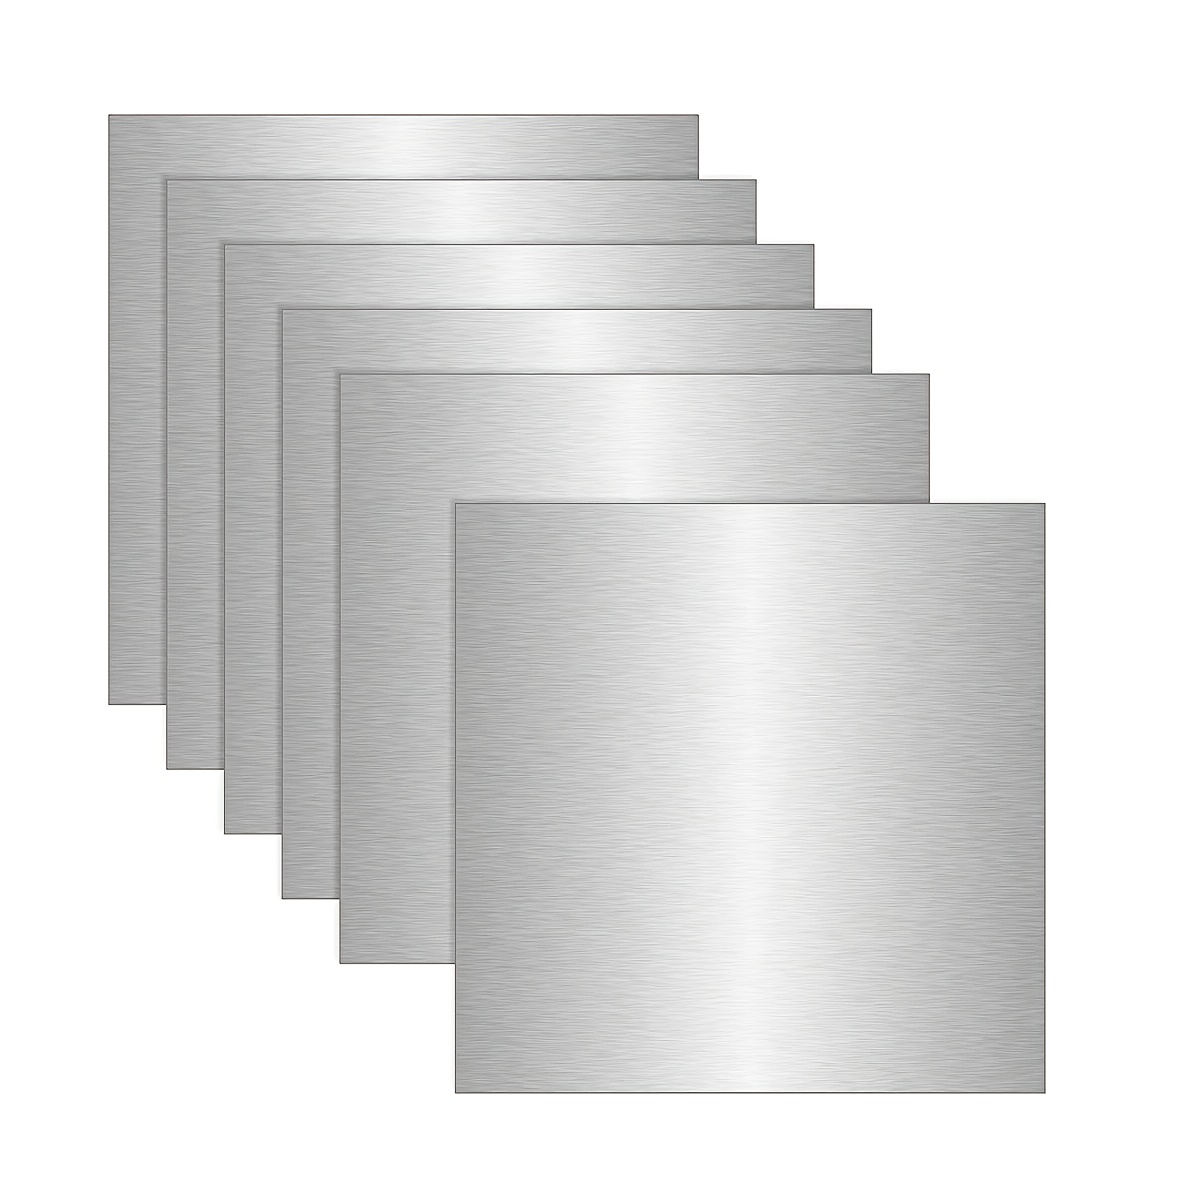 5052 Aluminum Sheet Metal 12 X 12 X 1/64 Inch Thin Flat